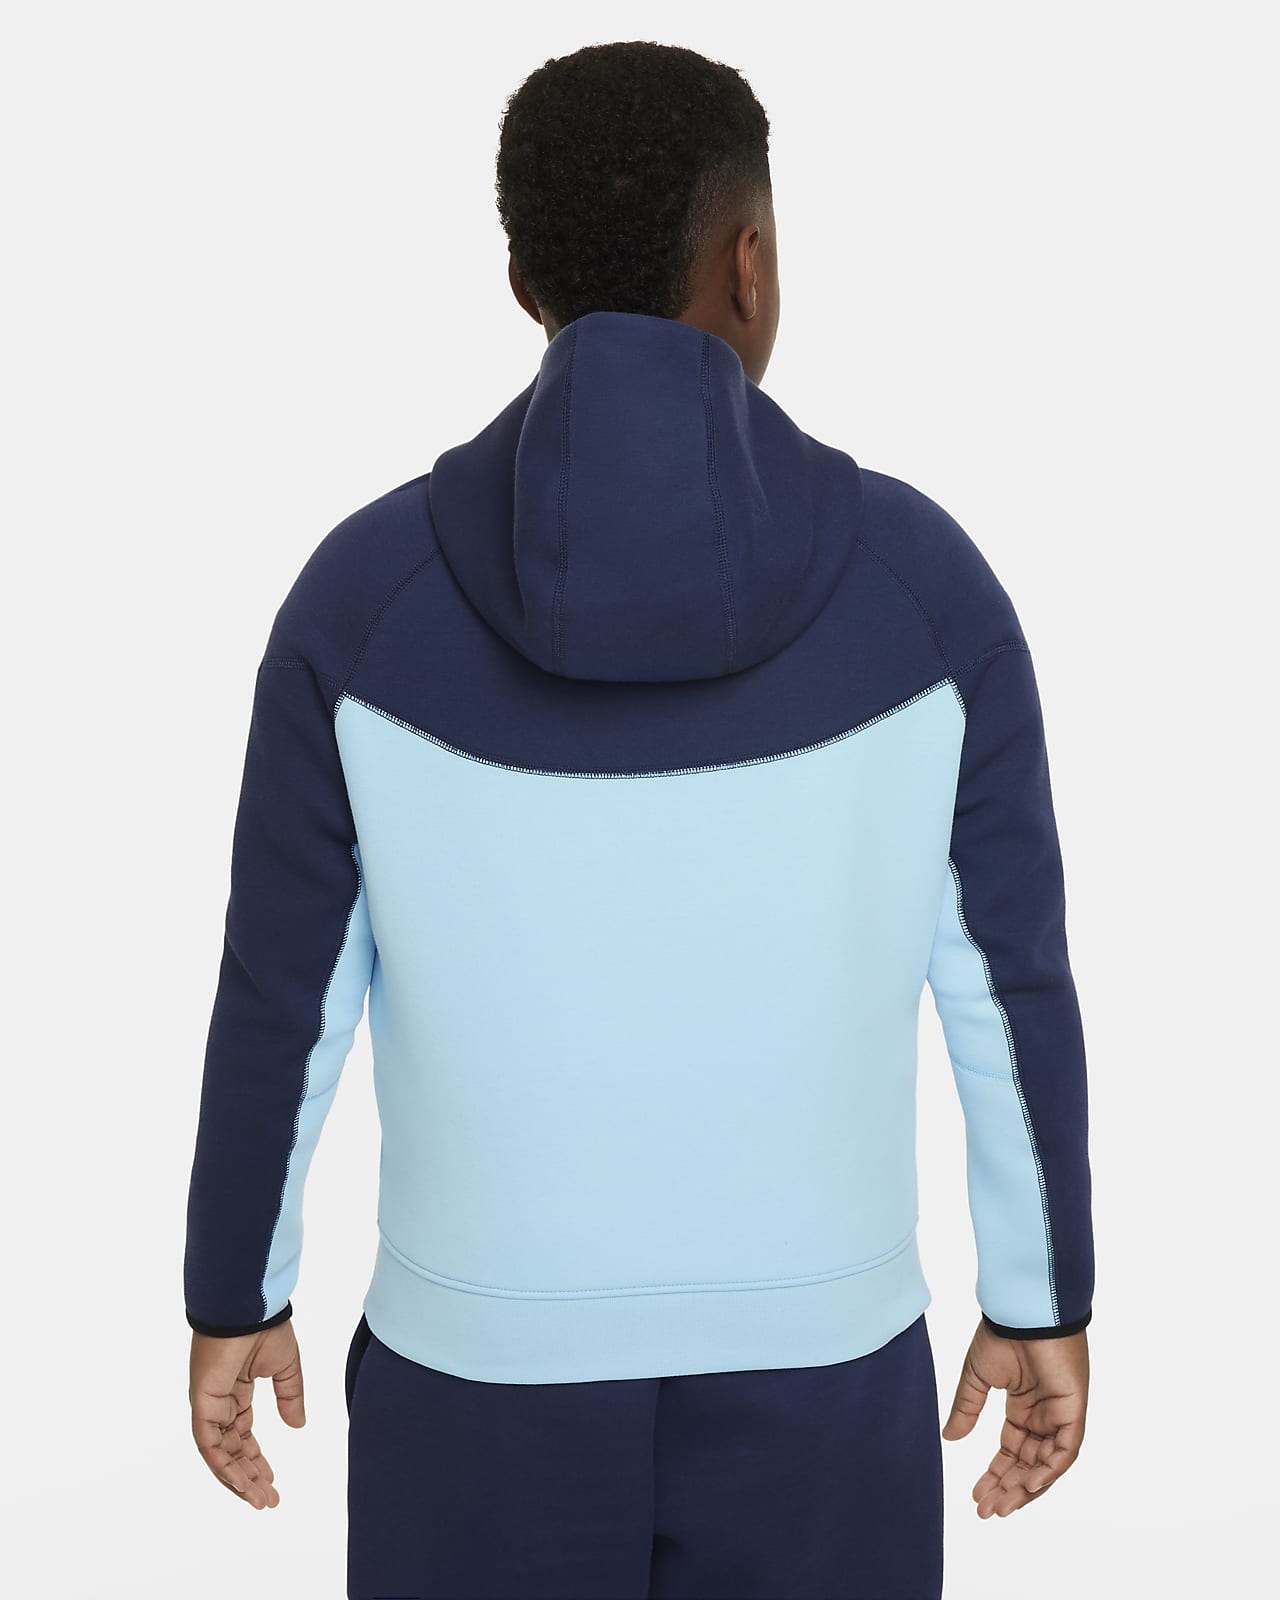 Men's Nike Tech Fleece Clothing & Accessories